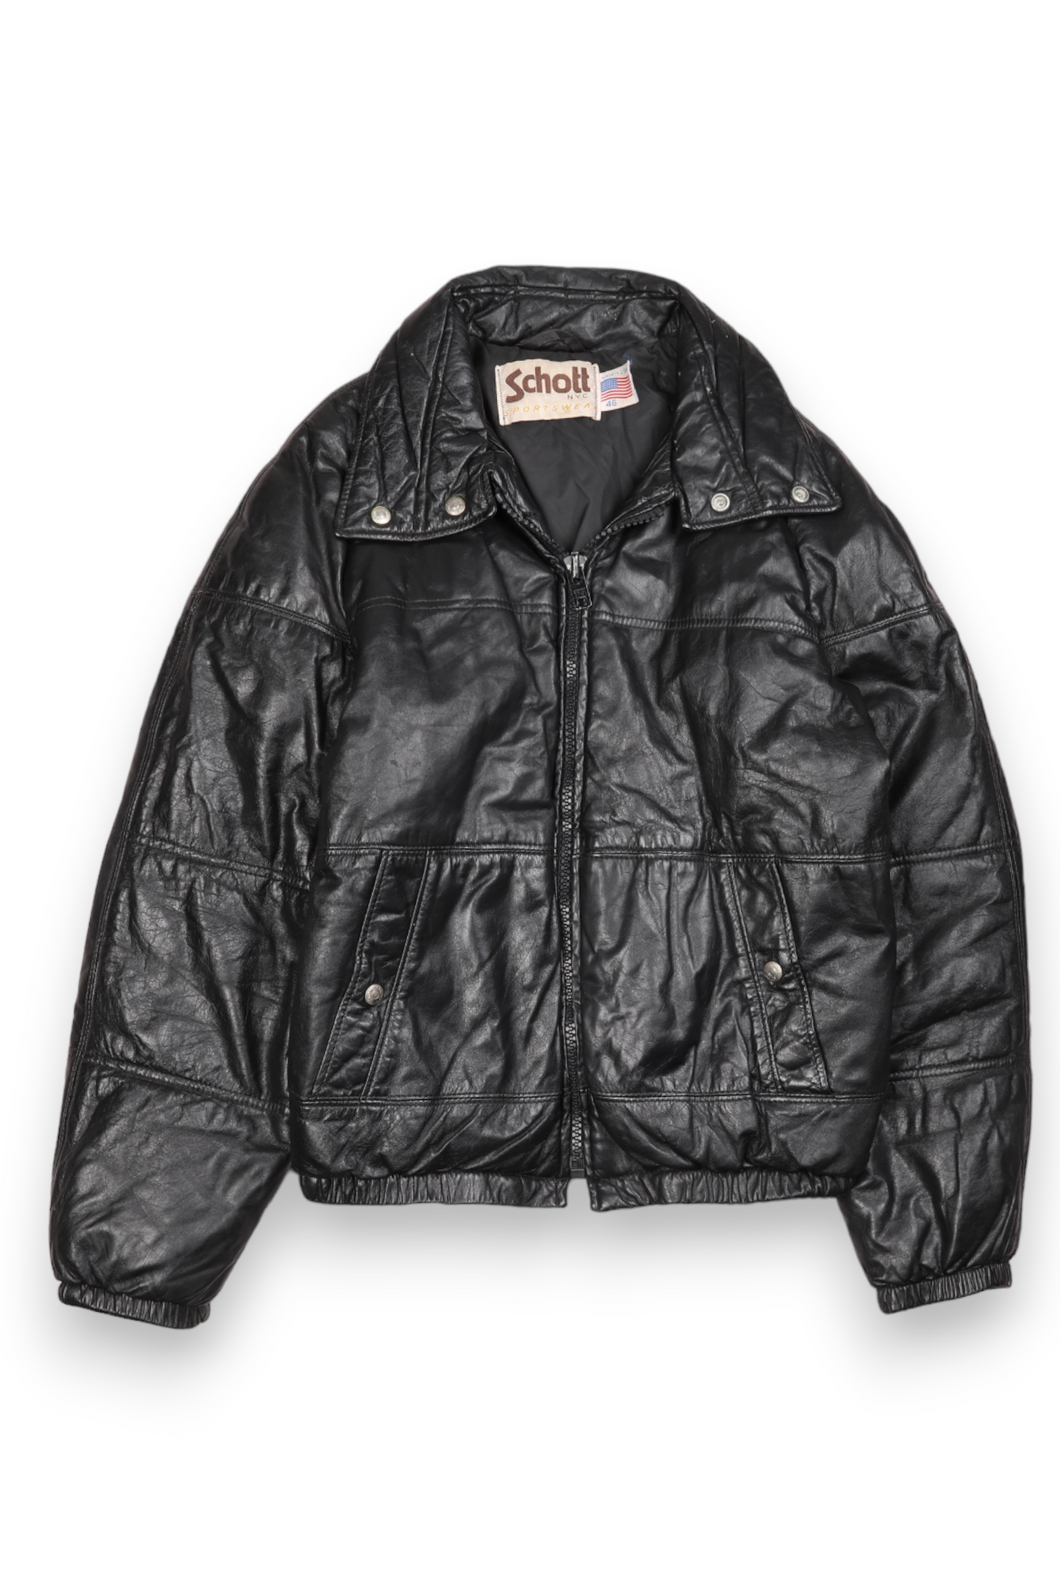 Schott black '80s leather jacket